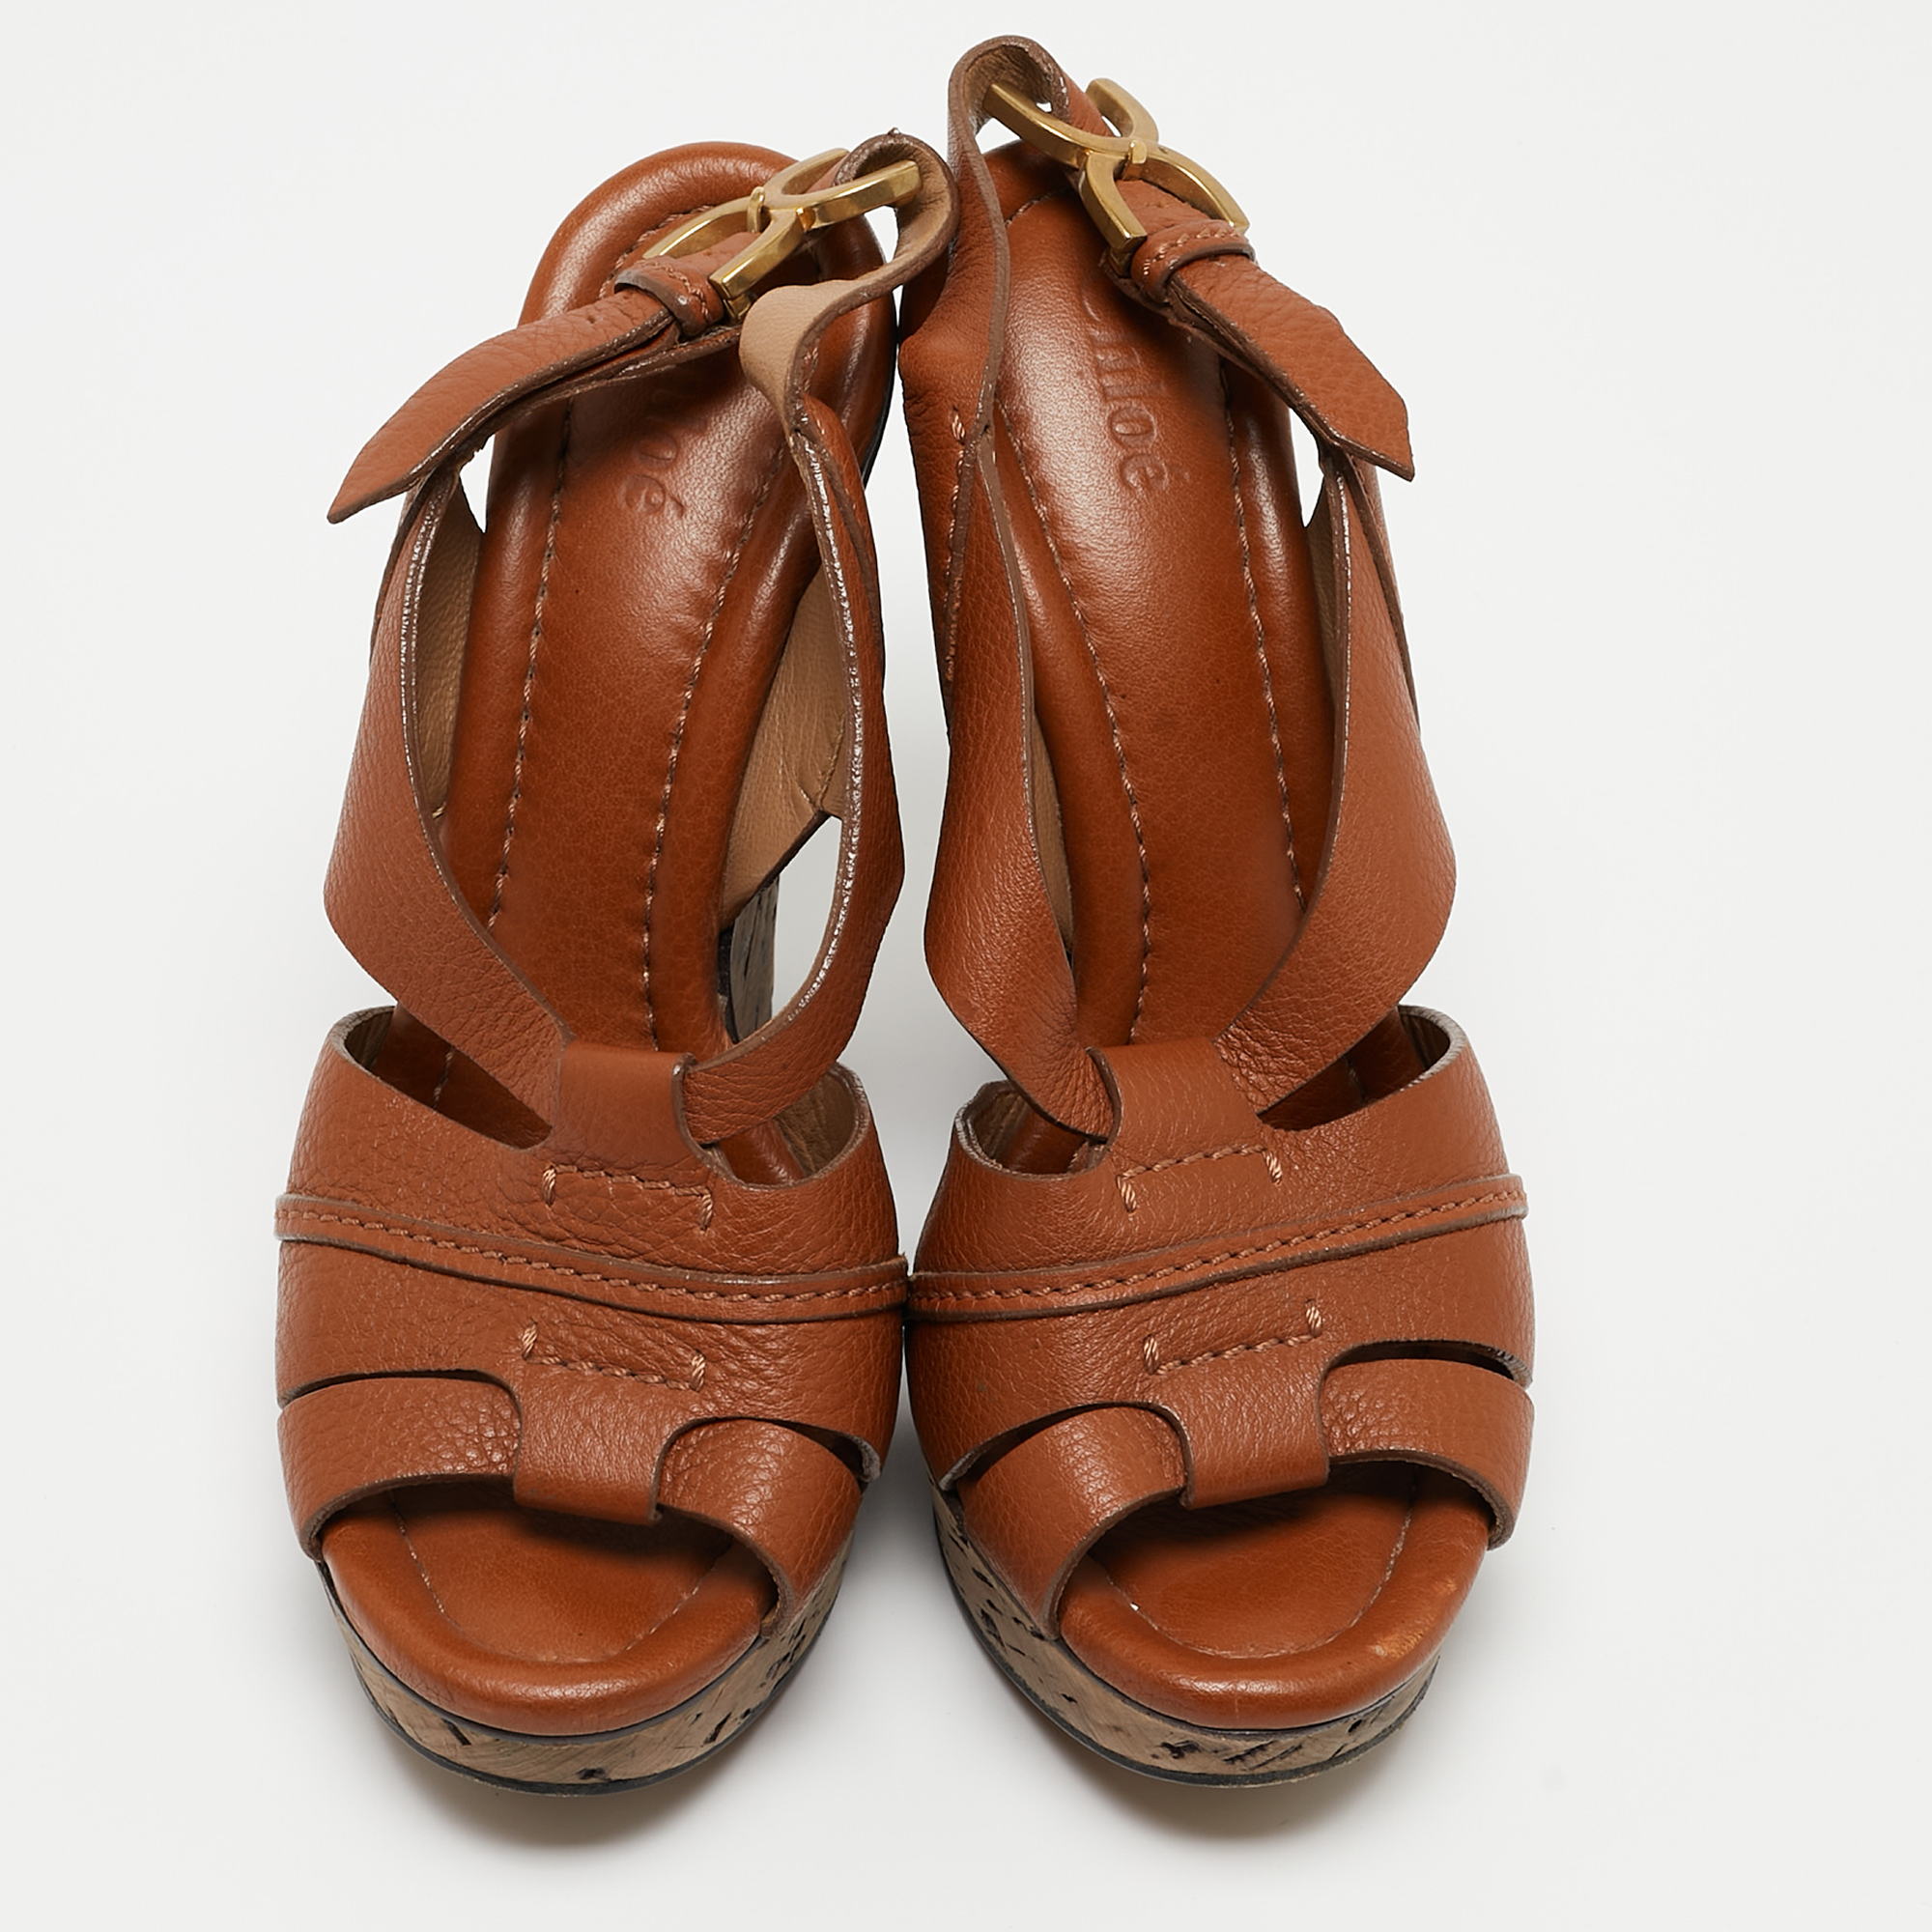 Chloe Brown Leather Cork Wedge Slingback Sandals Size 38